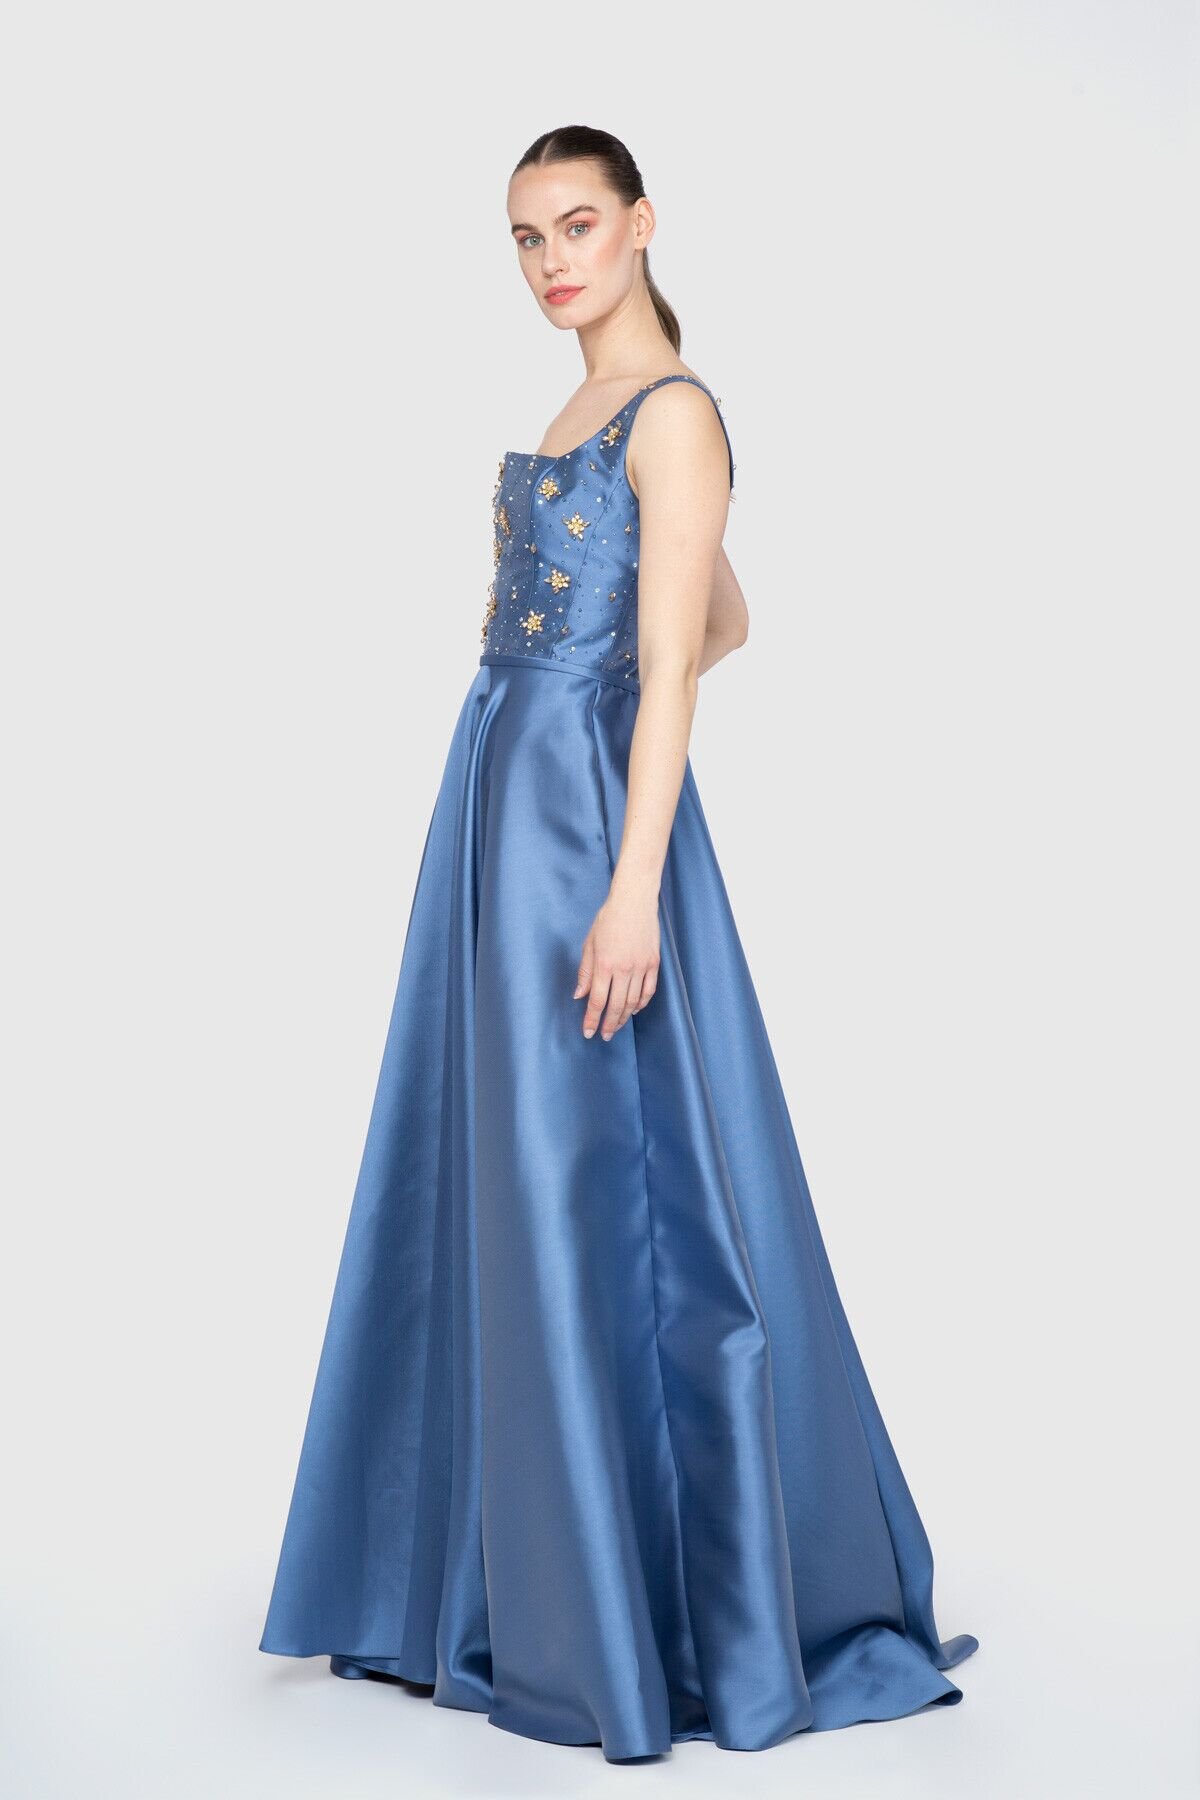 Square Neck Strap Voluminous Skirt Form Long Blue Dress